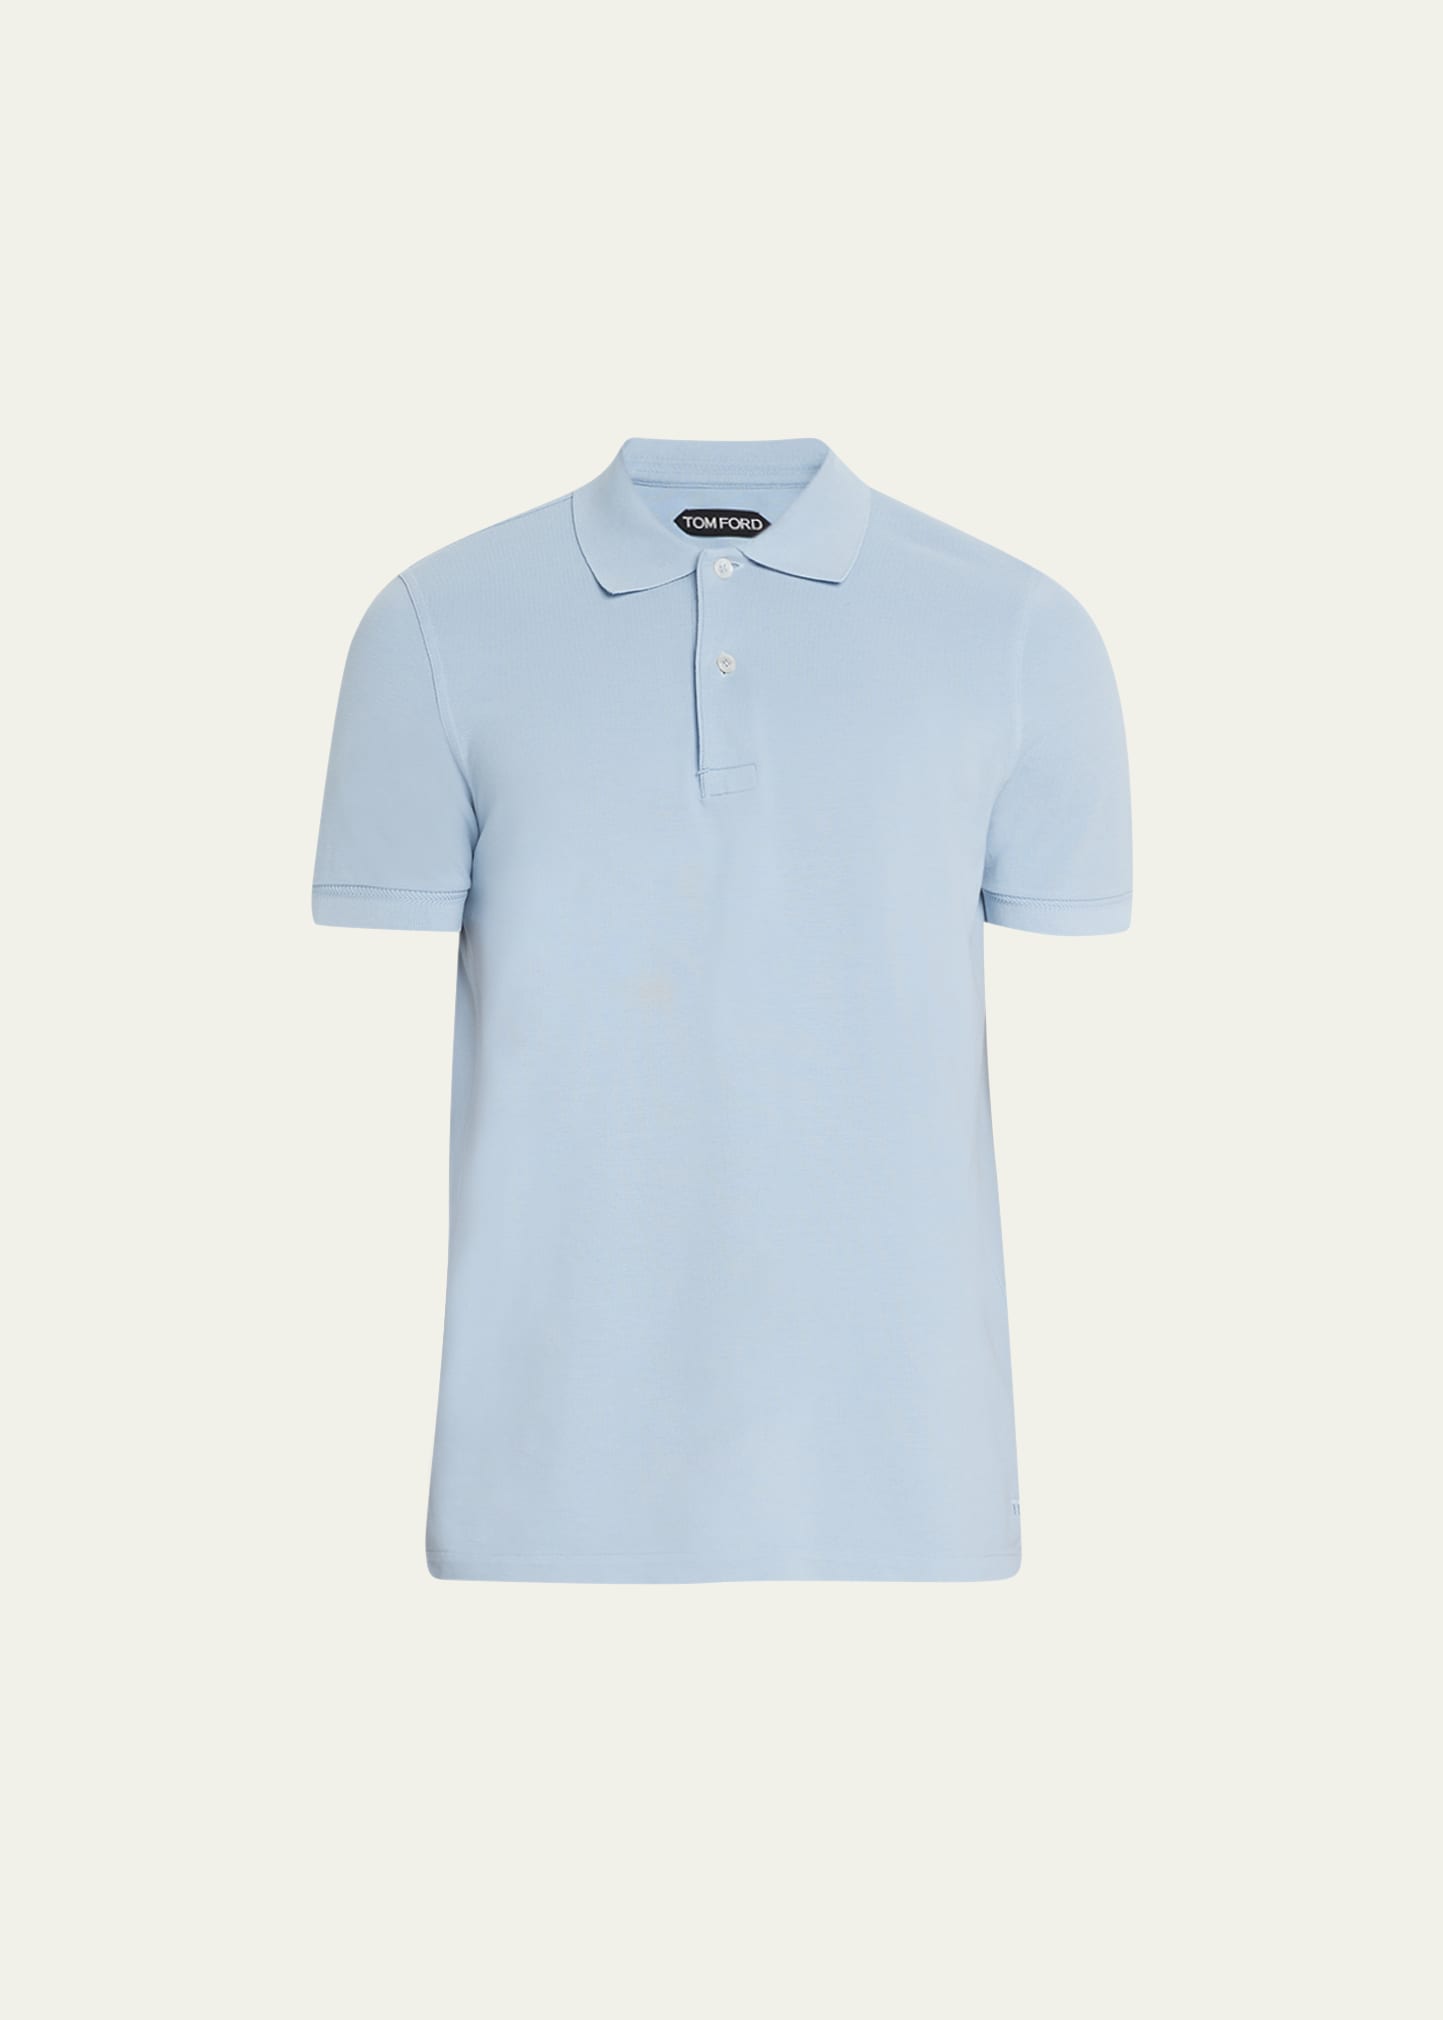 Tom Ford Men's Cotton Pique Polo Shirt In Light Blue